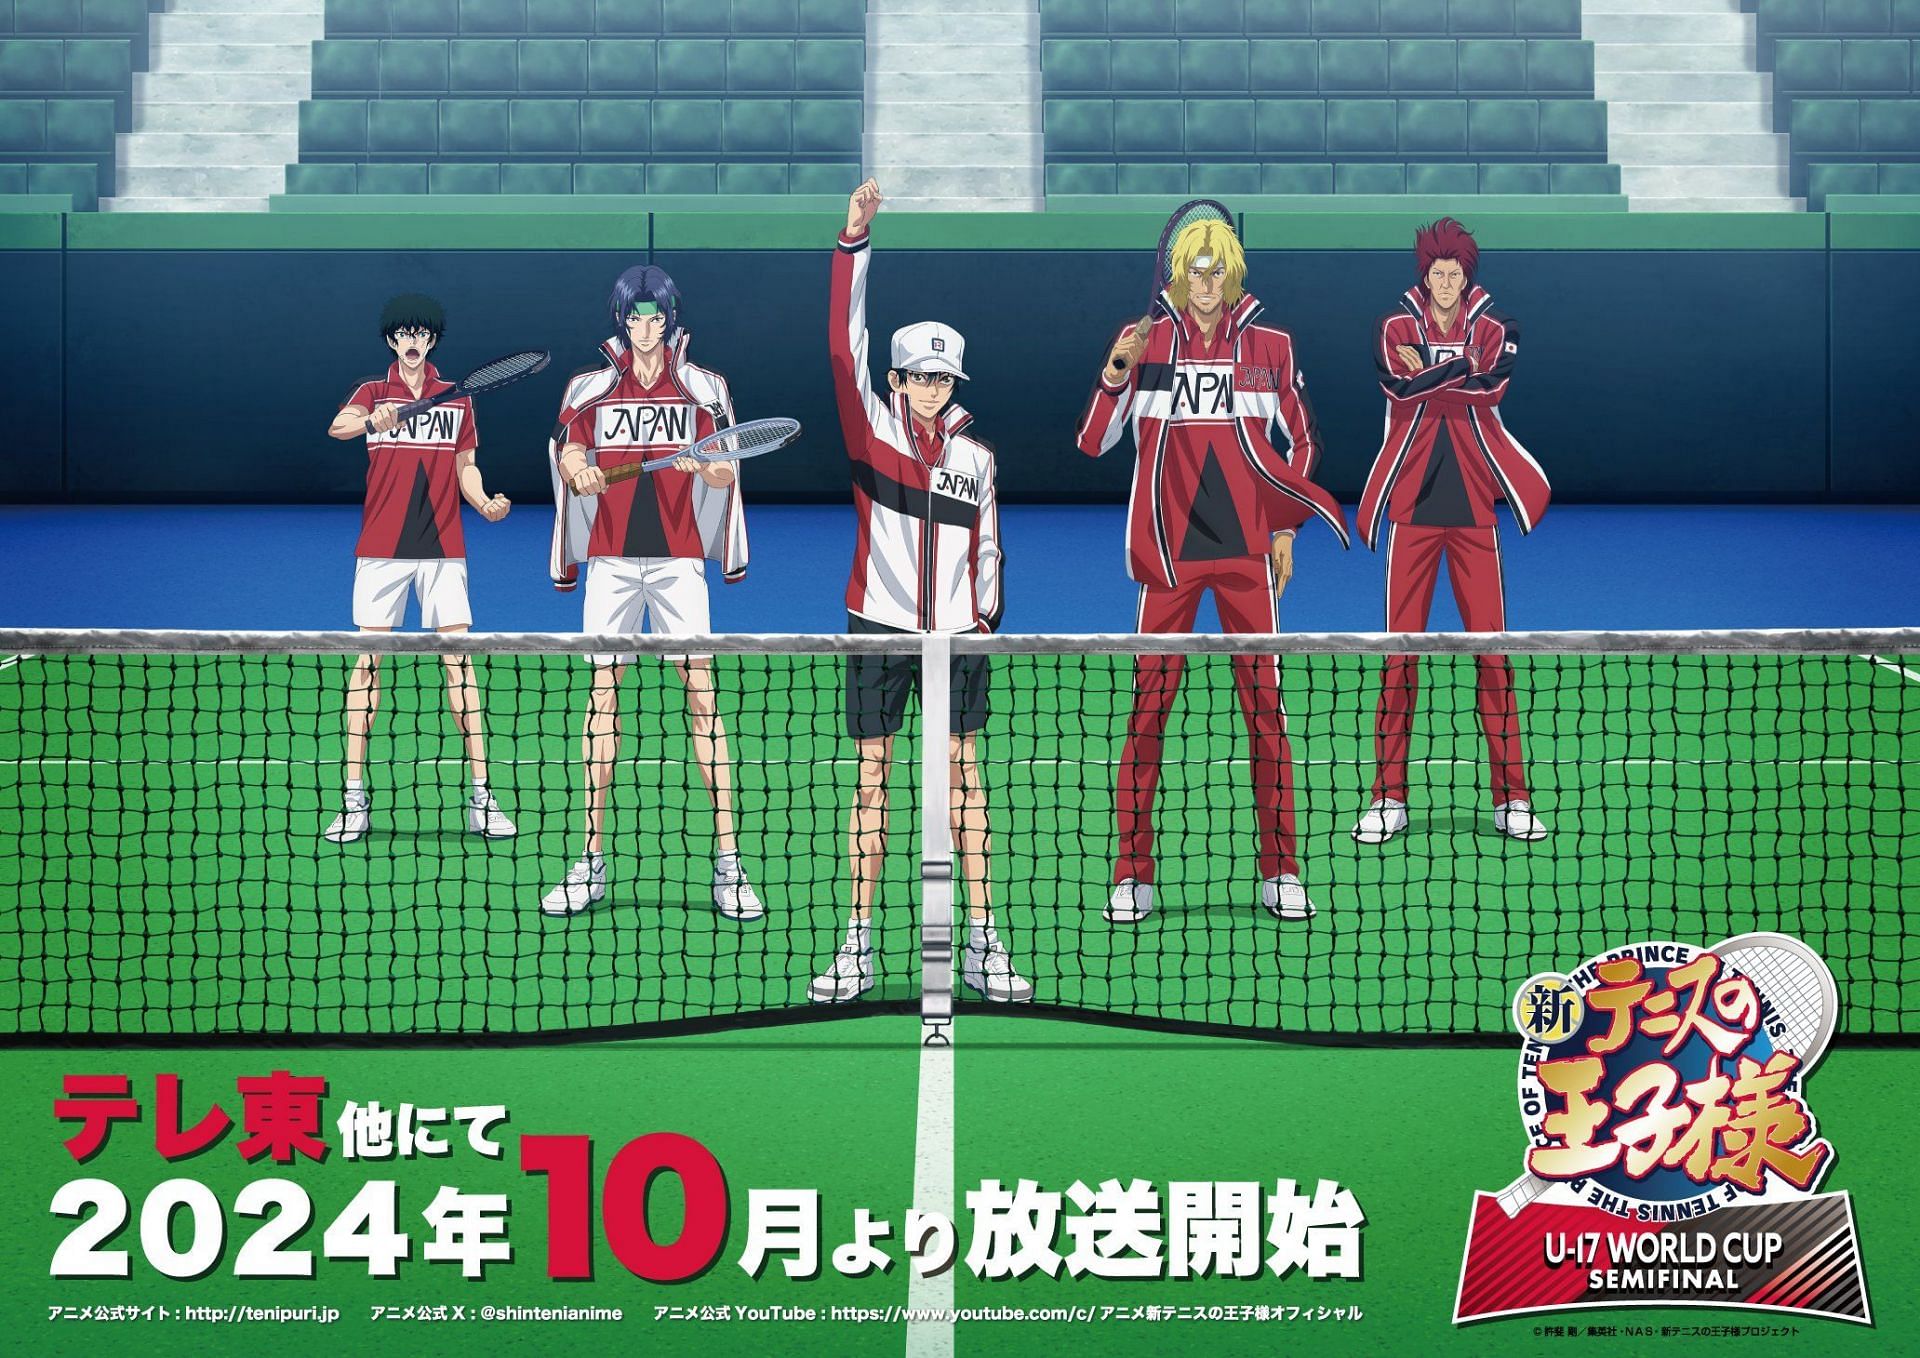 New Prince of Tennis: U-17 World Cup Semi-Final Match Anime Adaptation ...